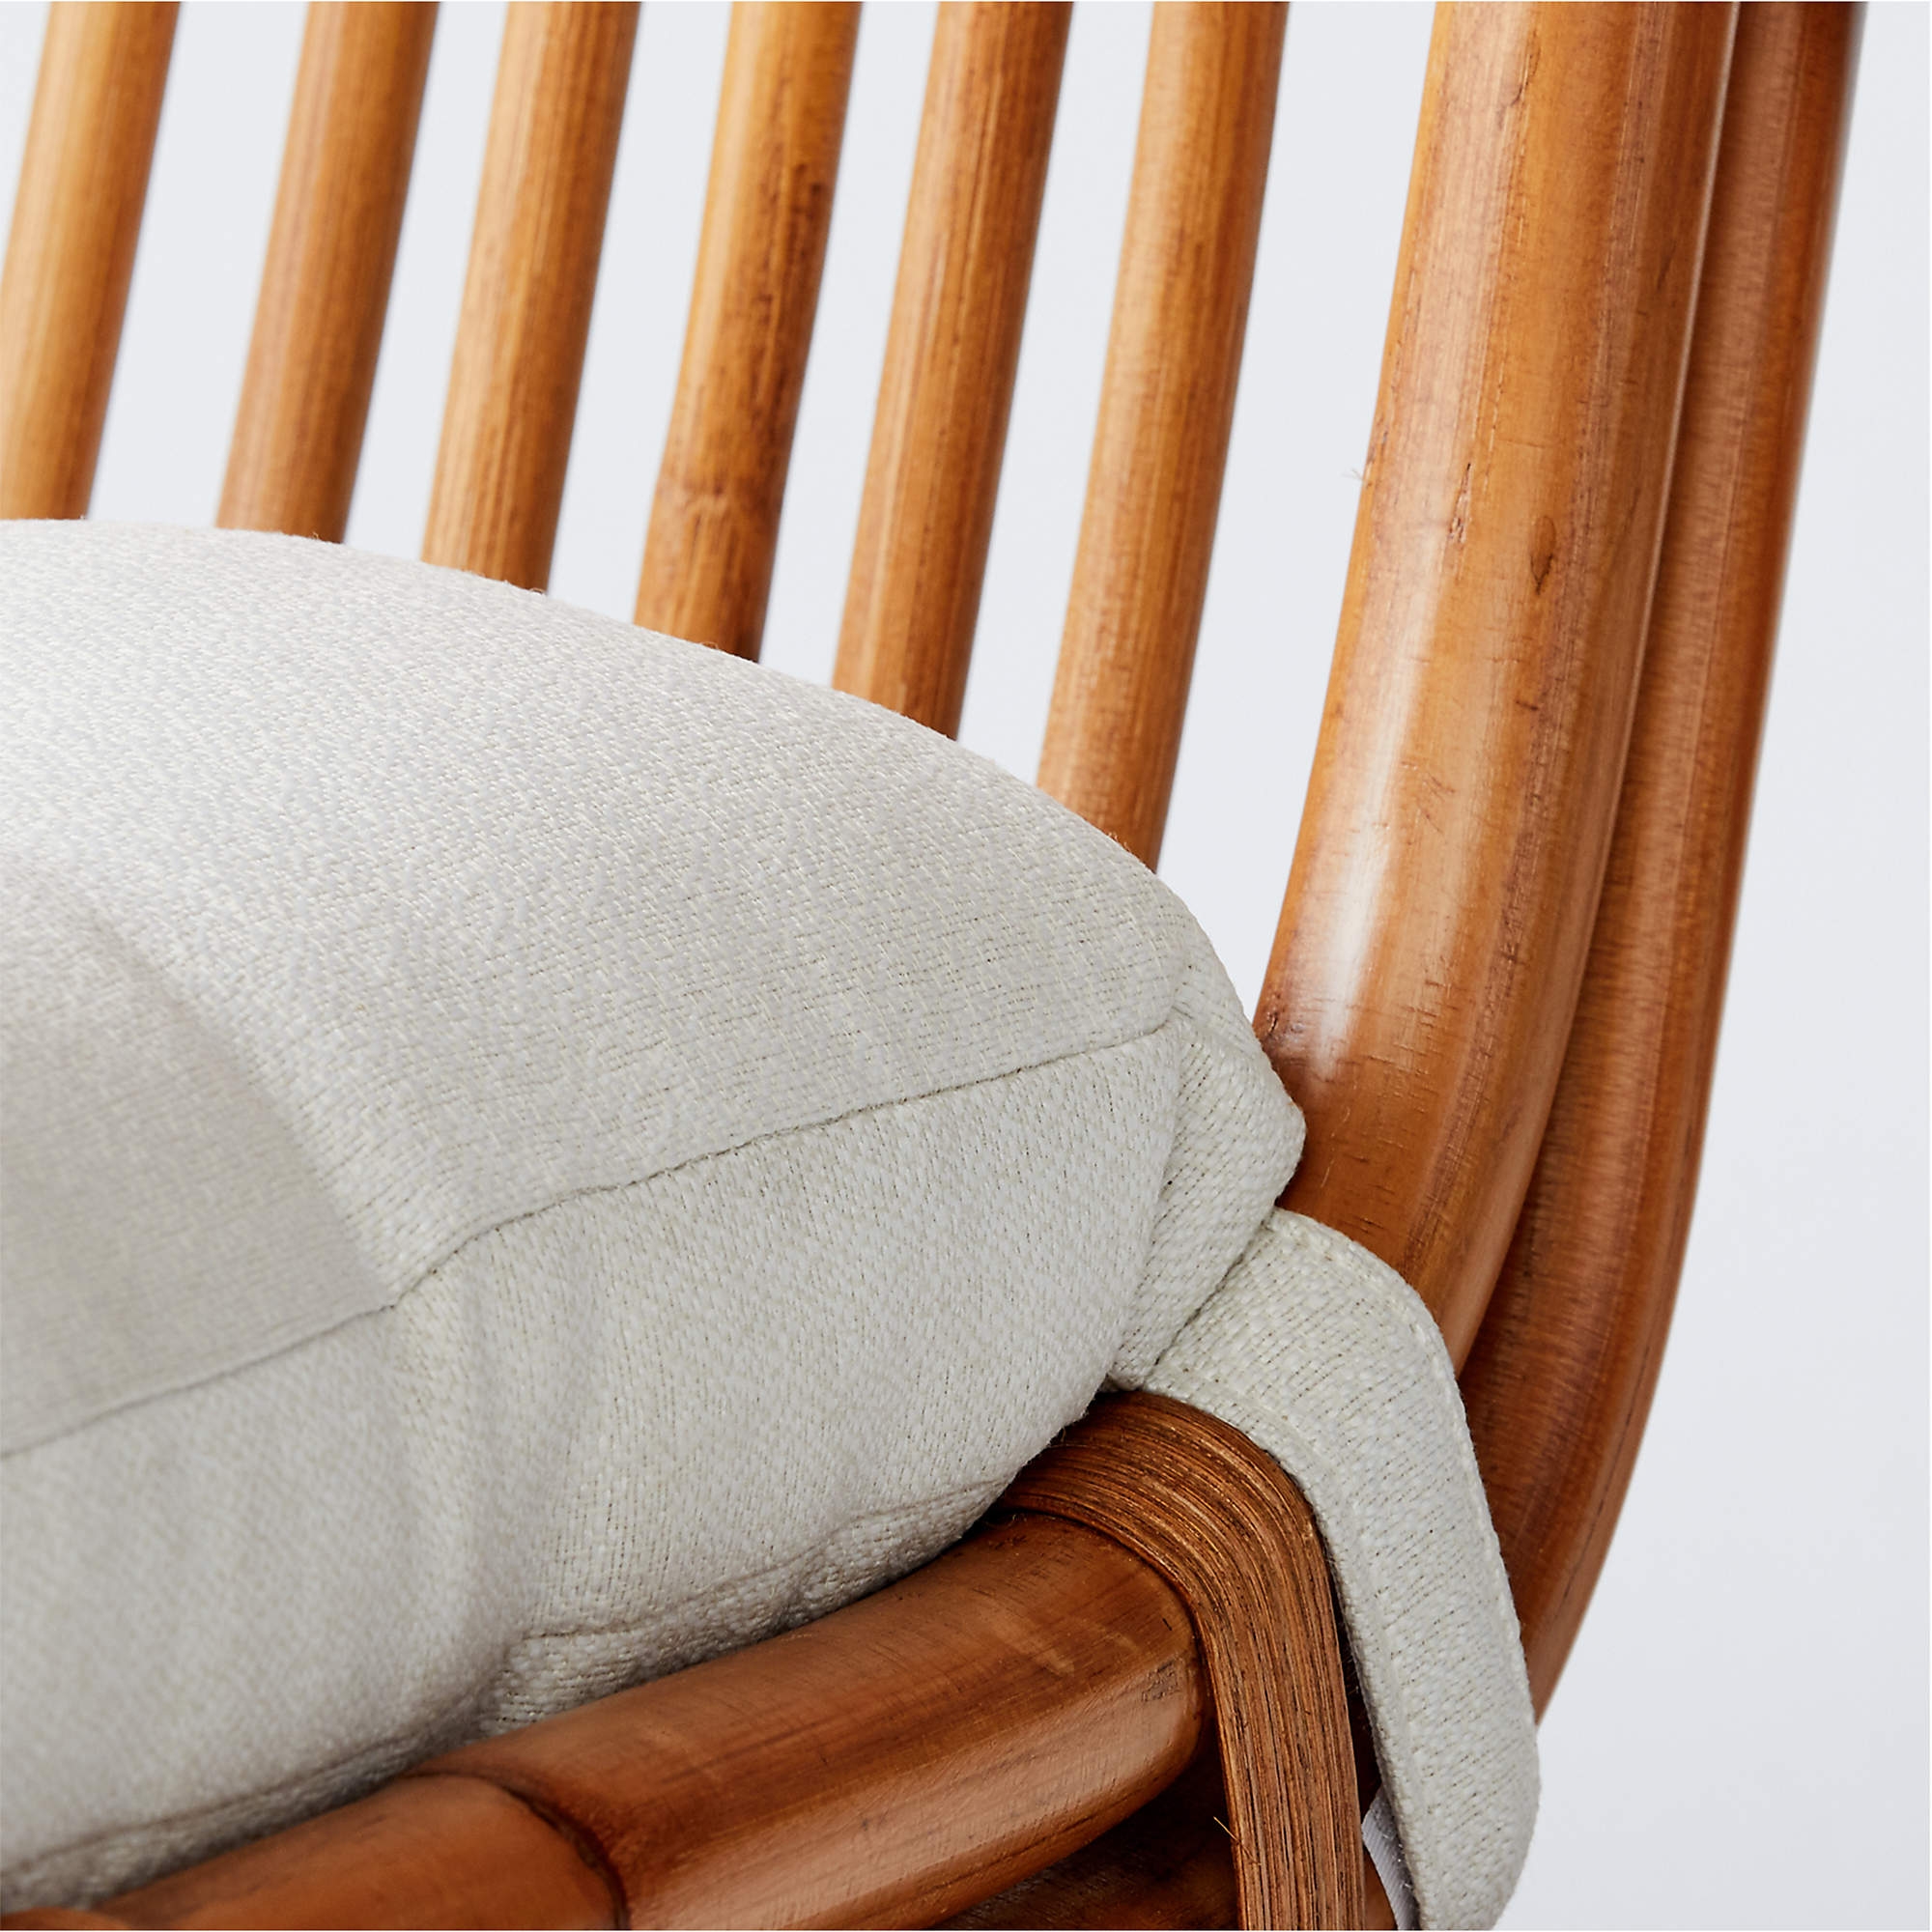 Noelie Rattan Lounge Chair with White Cushion, Mikkeli White - Image 7